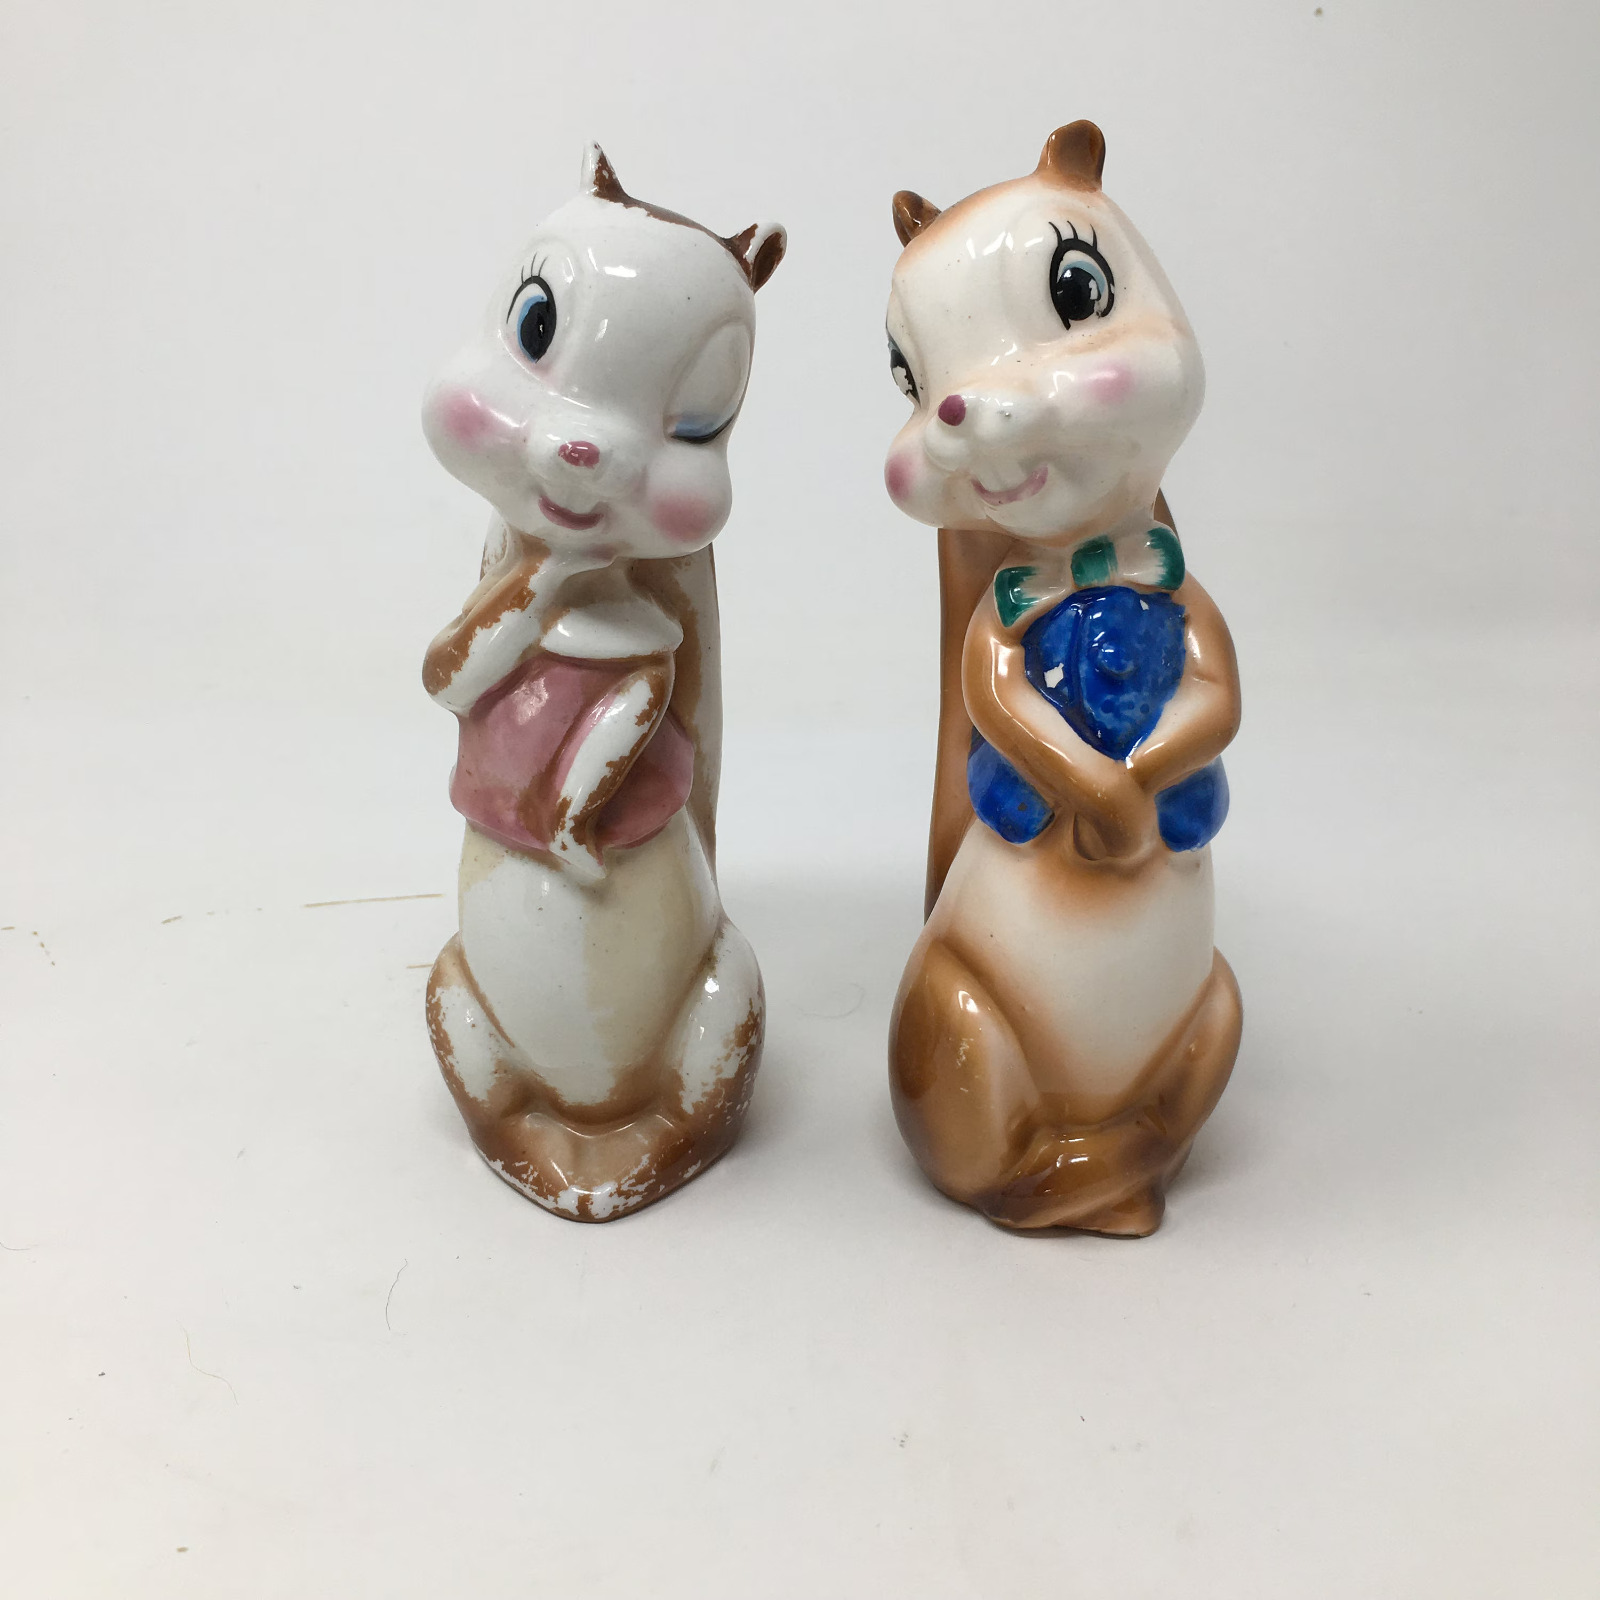 Pair of Ceramic Cute Squirrel Figurine Salt Pepper Shakers Kitschy Kitchen